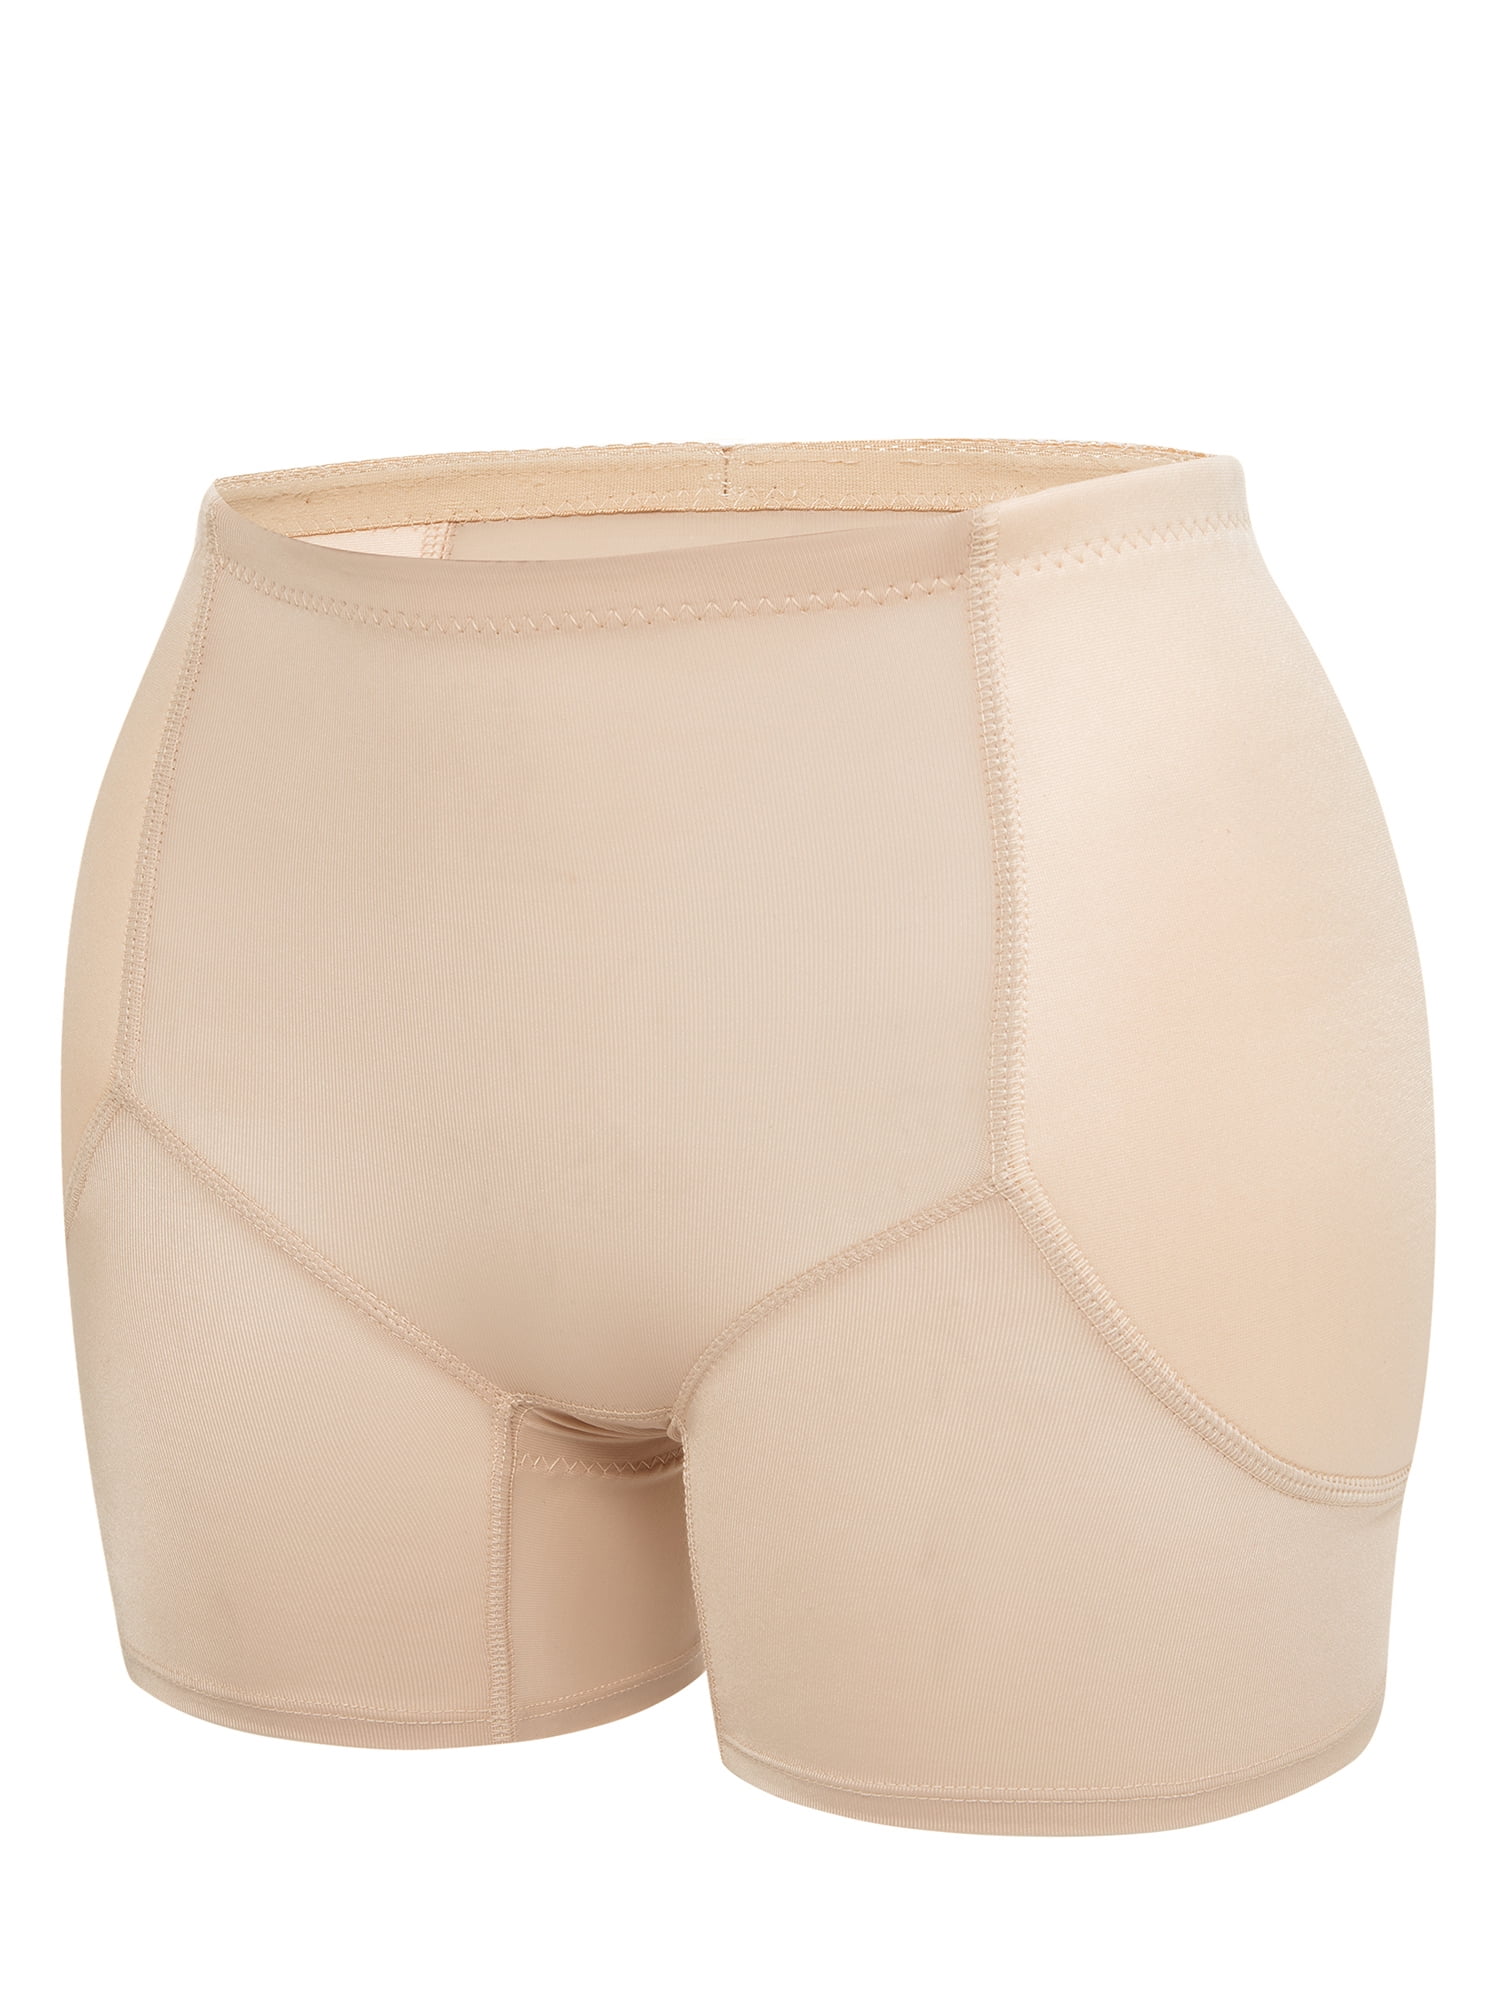 Buy La Reve Butt Lifter Padded Panty Enhancing Body Shaper for